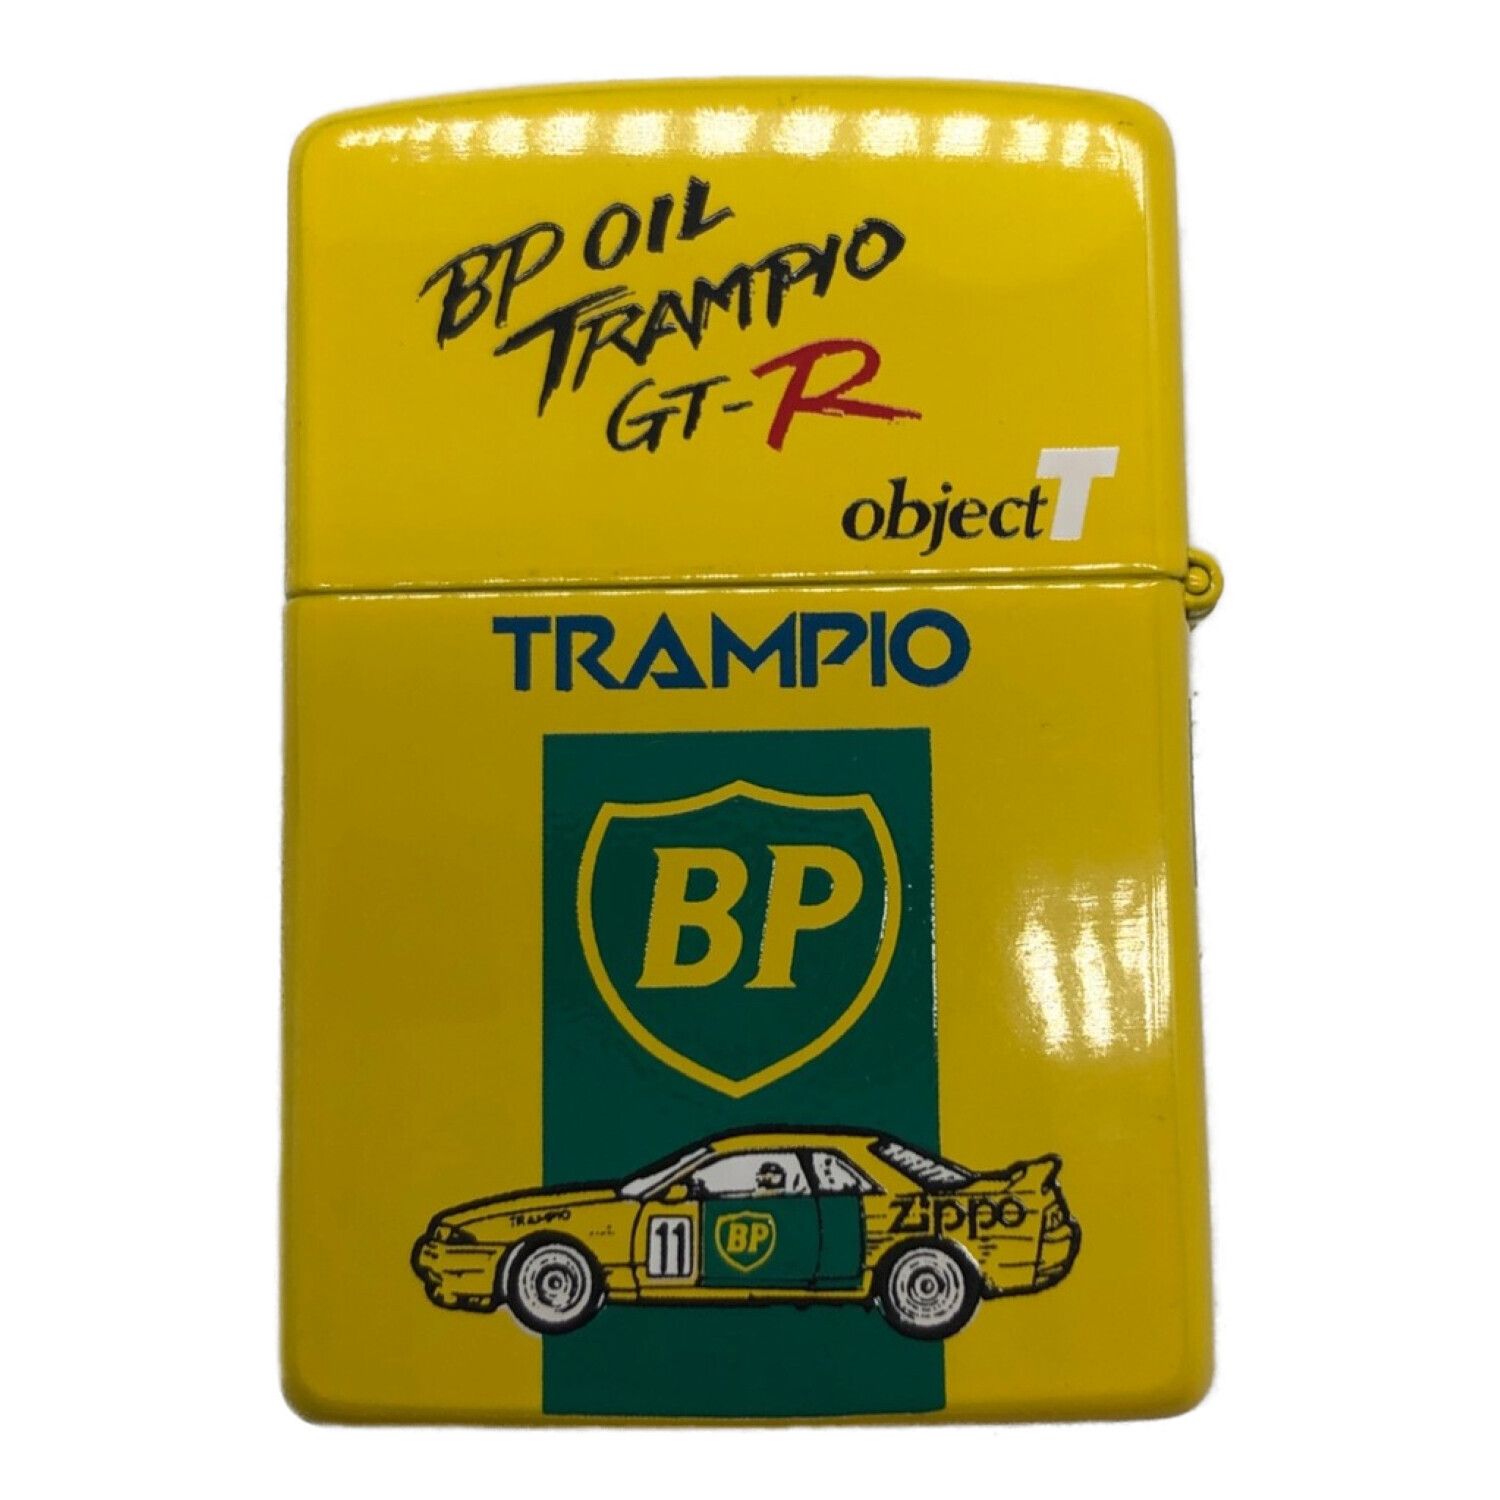 Zippo BP OIL TRAMPIO GT-R 1993年 優勝記念-